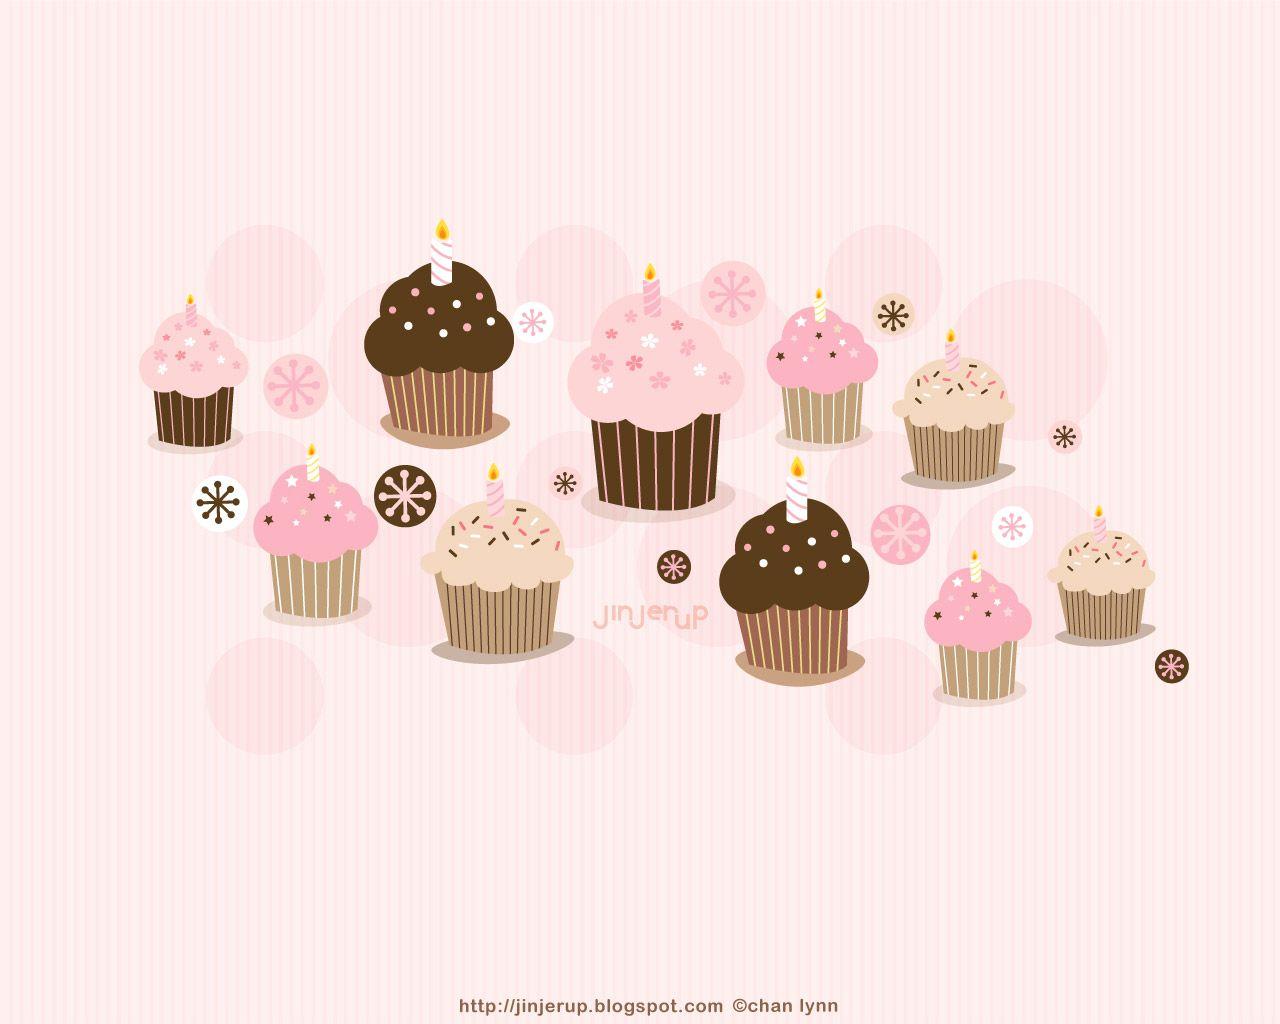 Cute Kawaii Cupcakes wallpaper backgroundcatwalpapers.blogspot.com